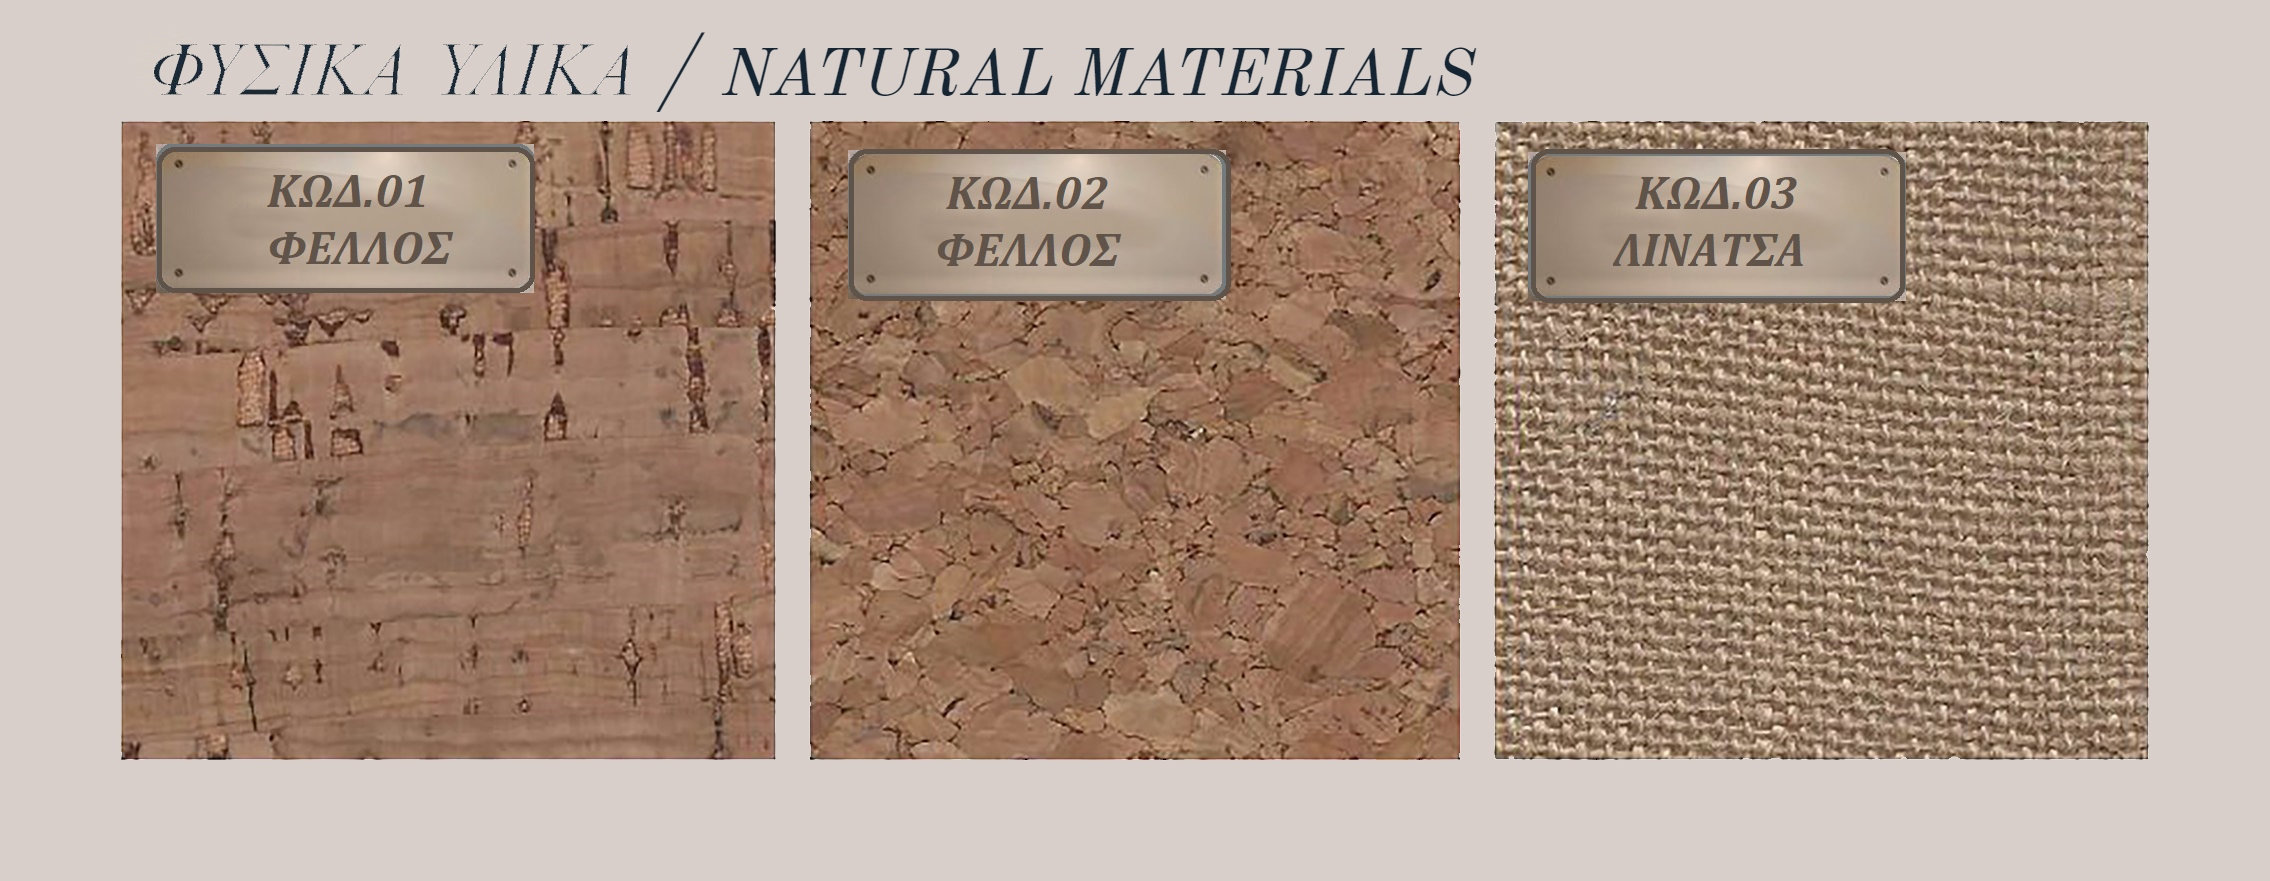 images/Items/Materials/07.NATURAL MATERIALS.jpg